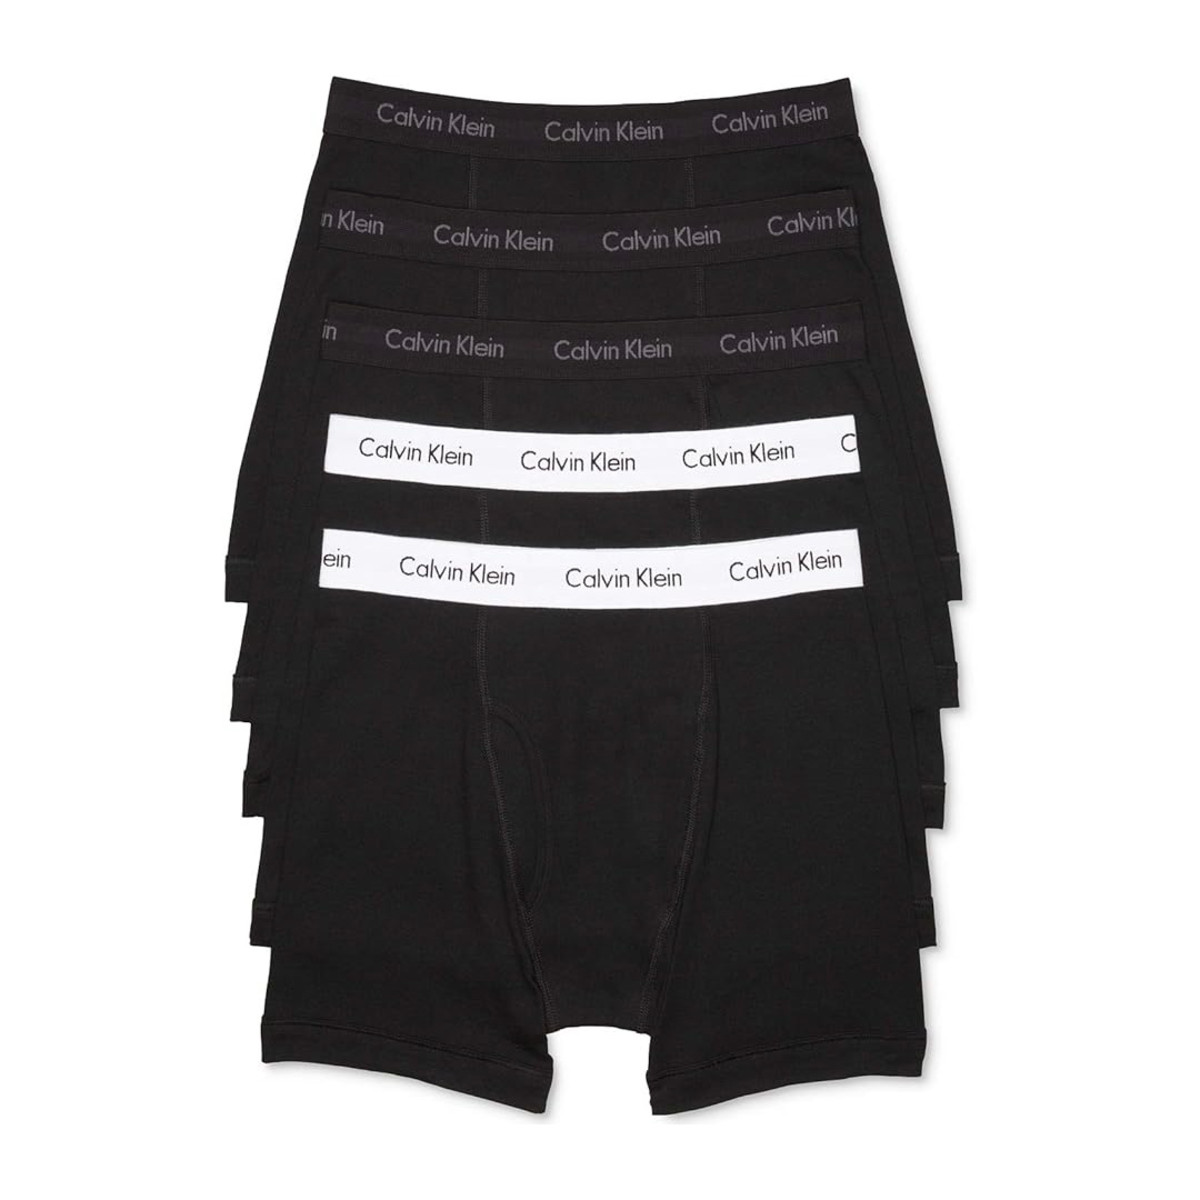 Calvin Klein Cotton Classic Vs Cotton Stretch Boxer – Textile